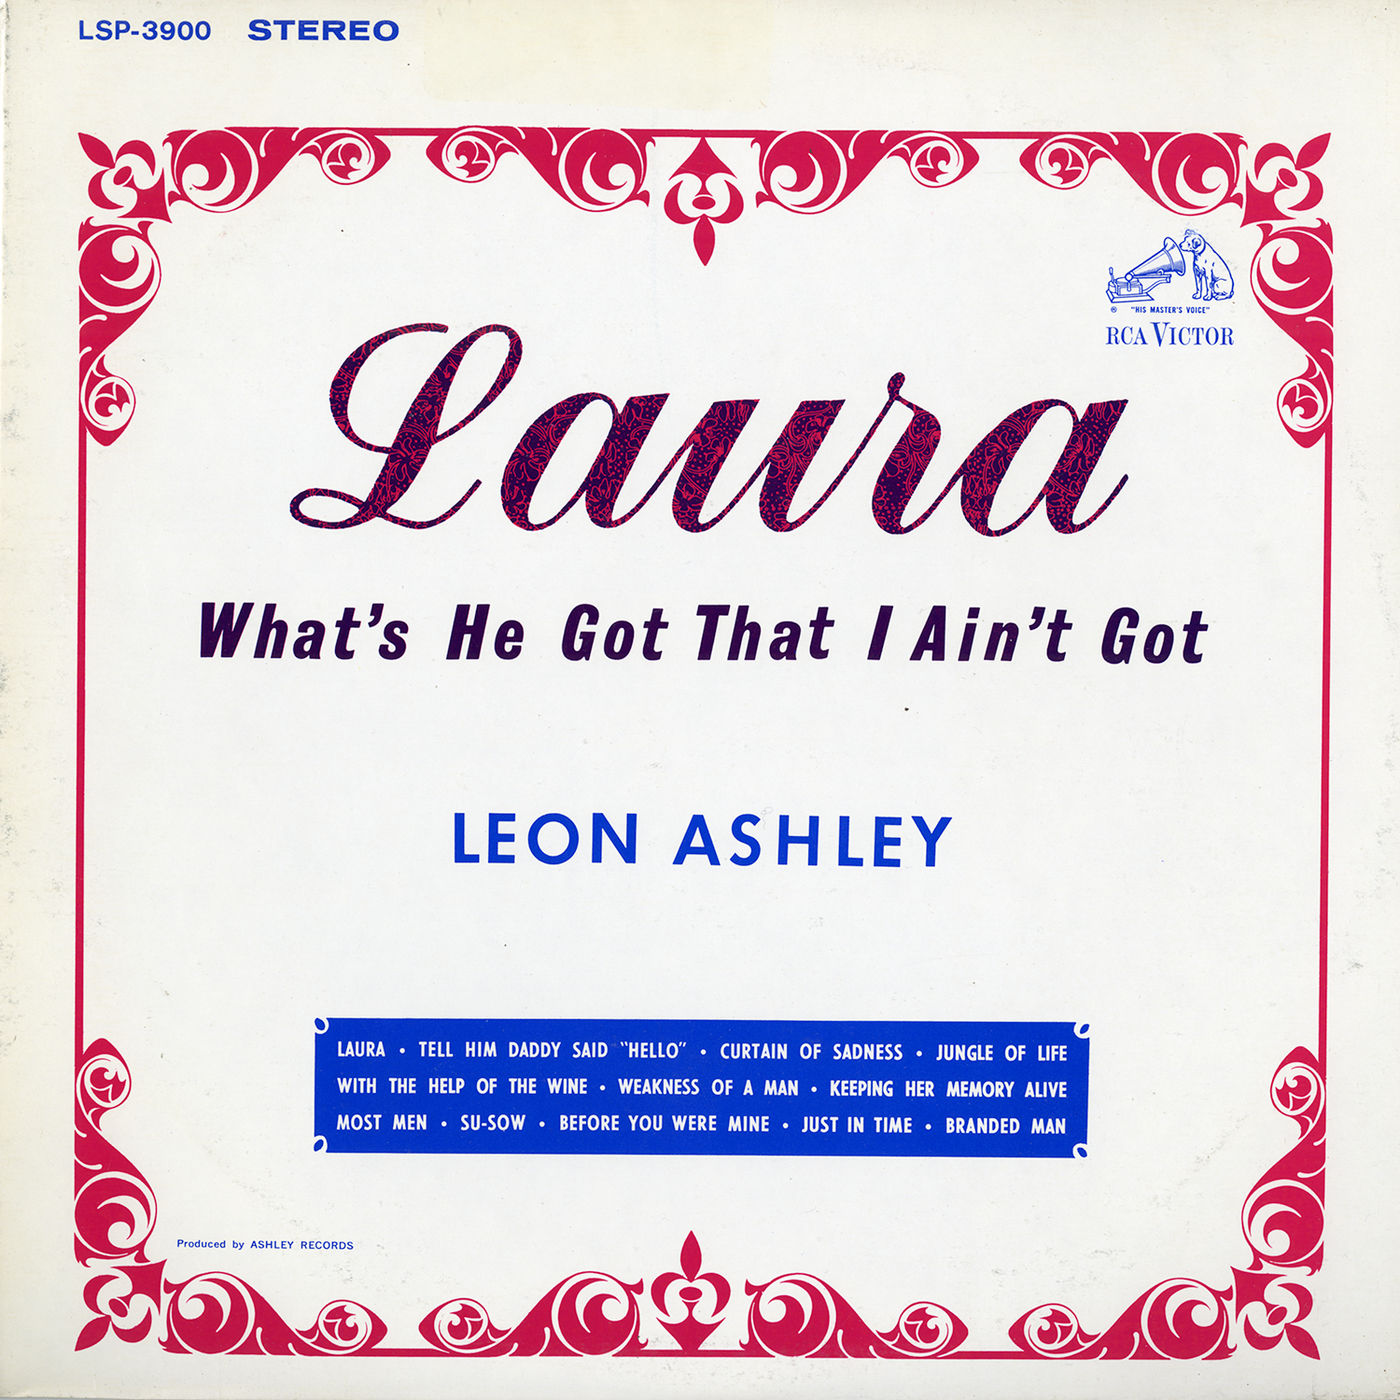 Leon Ashley – Laura (What’s He Got That I Ain’t Got)